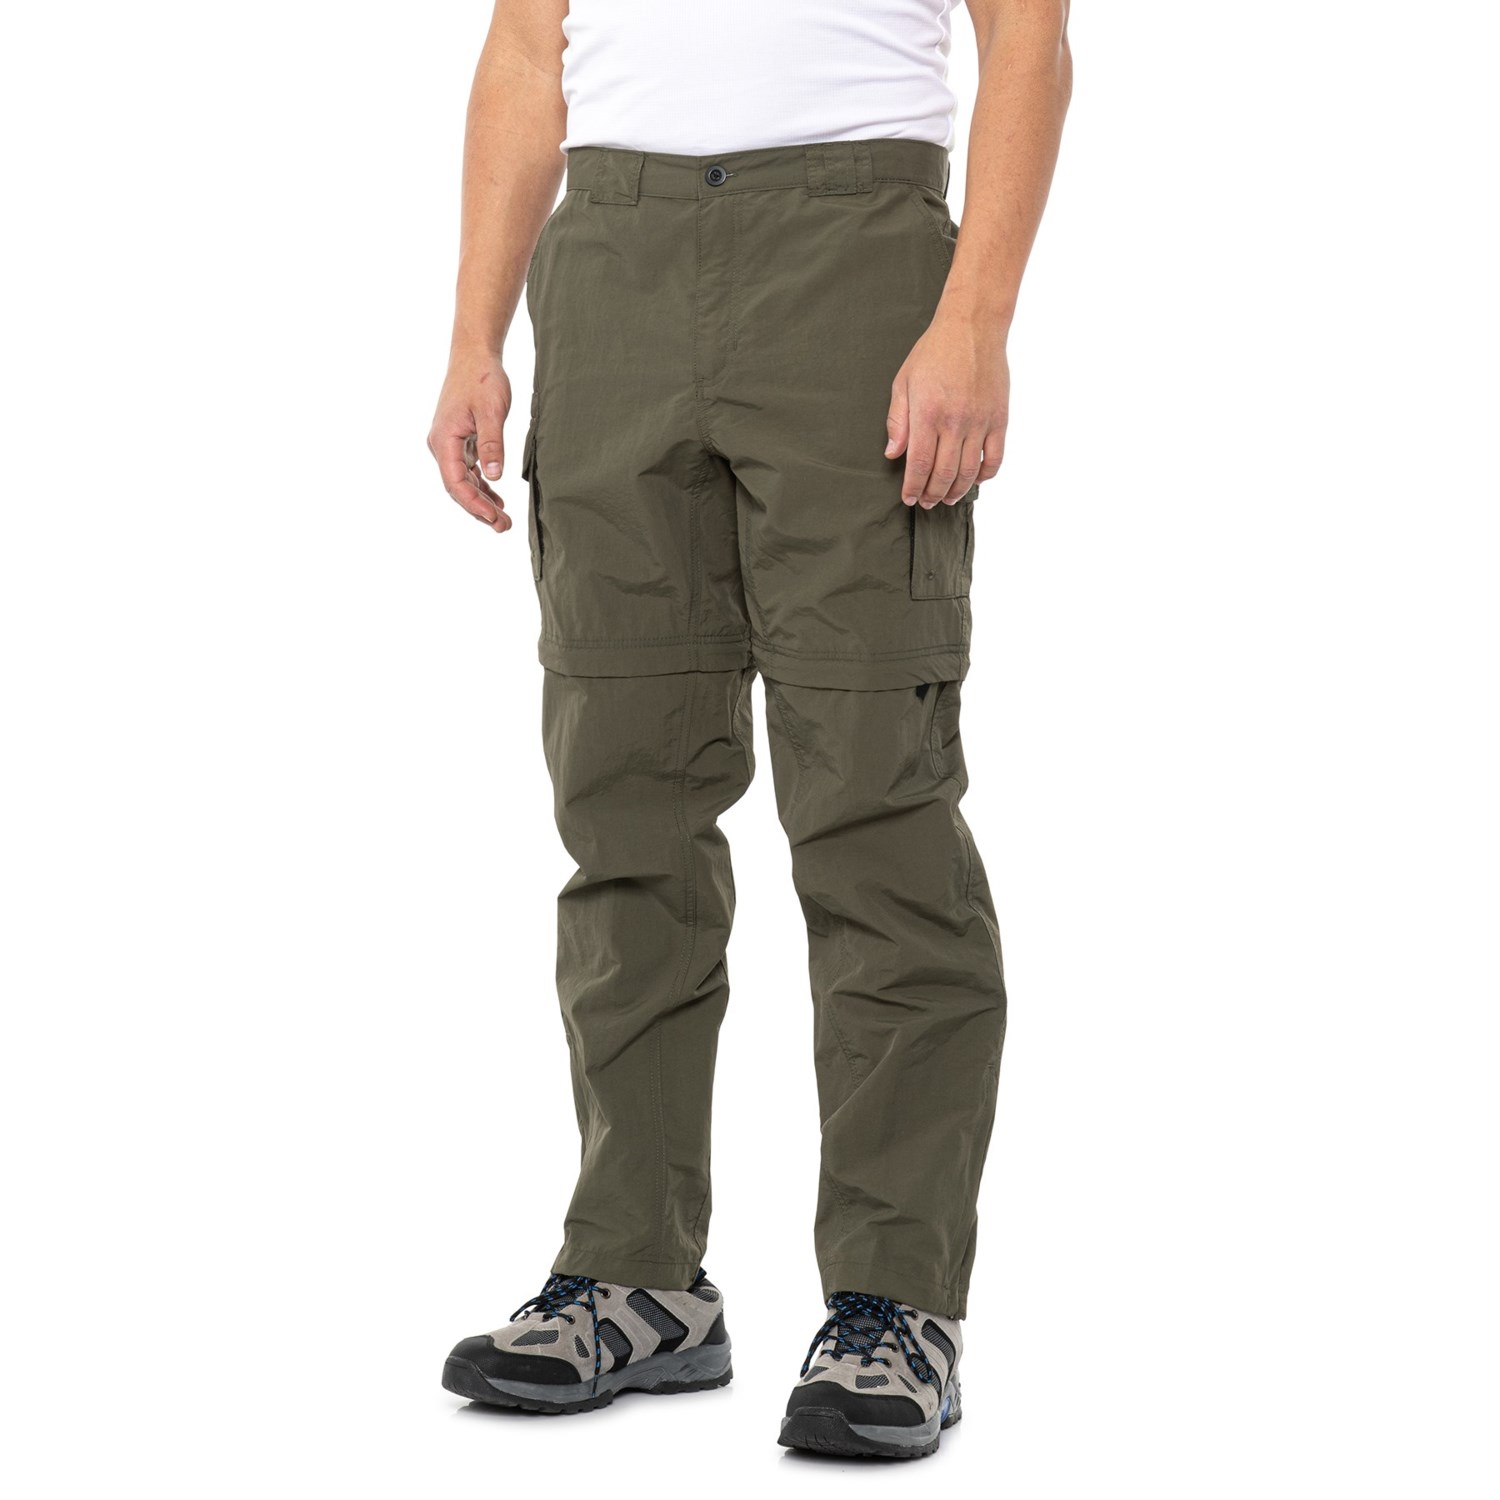 Swiss Alps Nylon Convertible Pants (For Men) - Save 44%